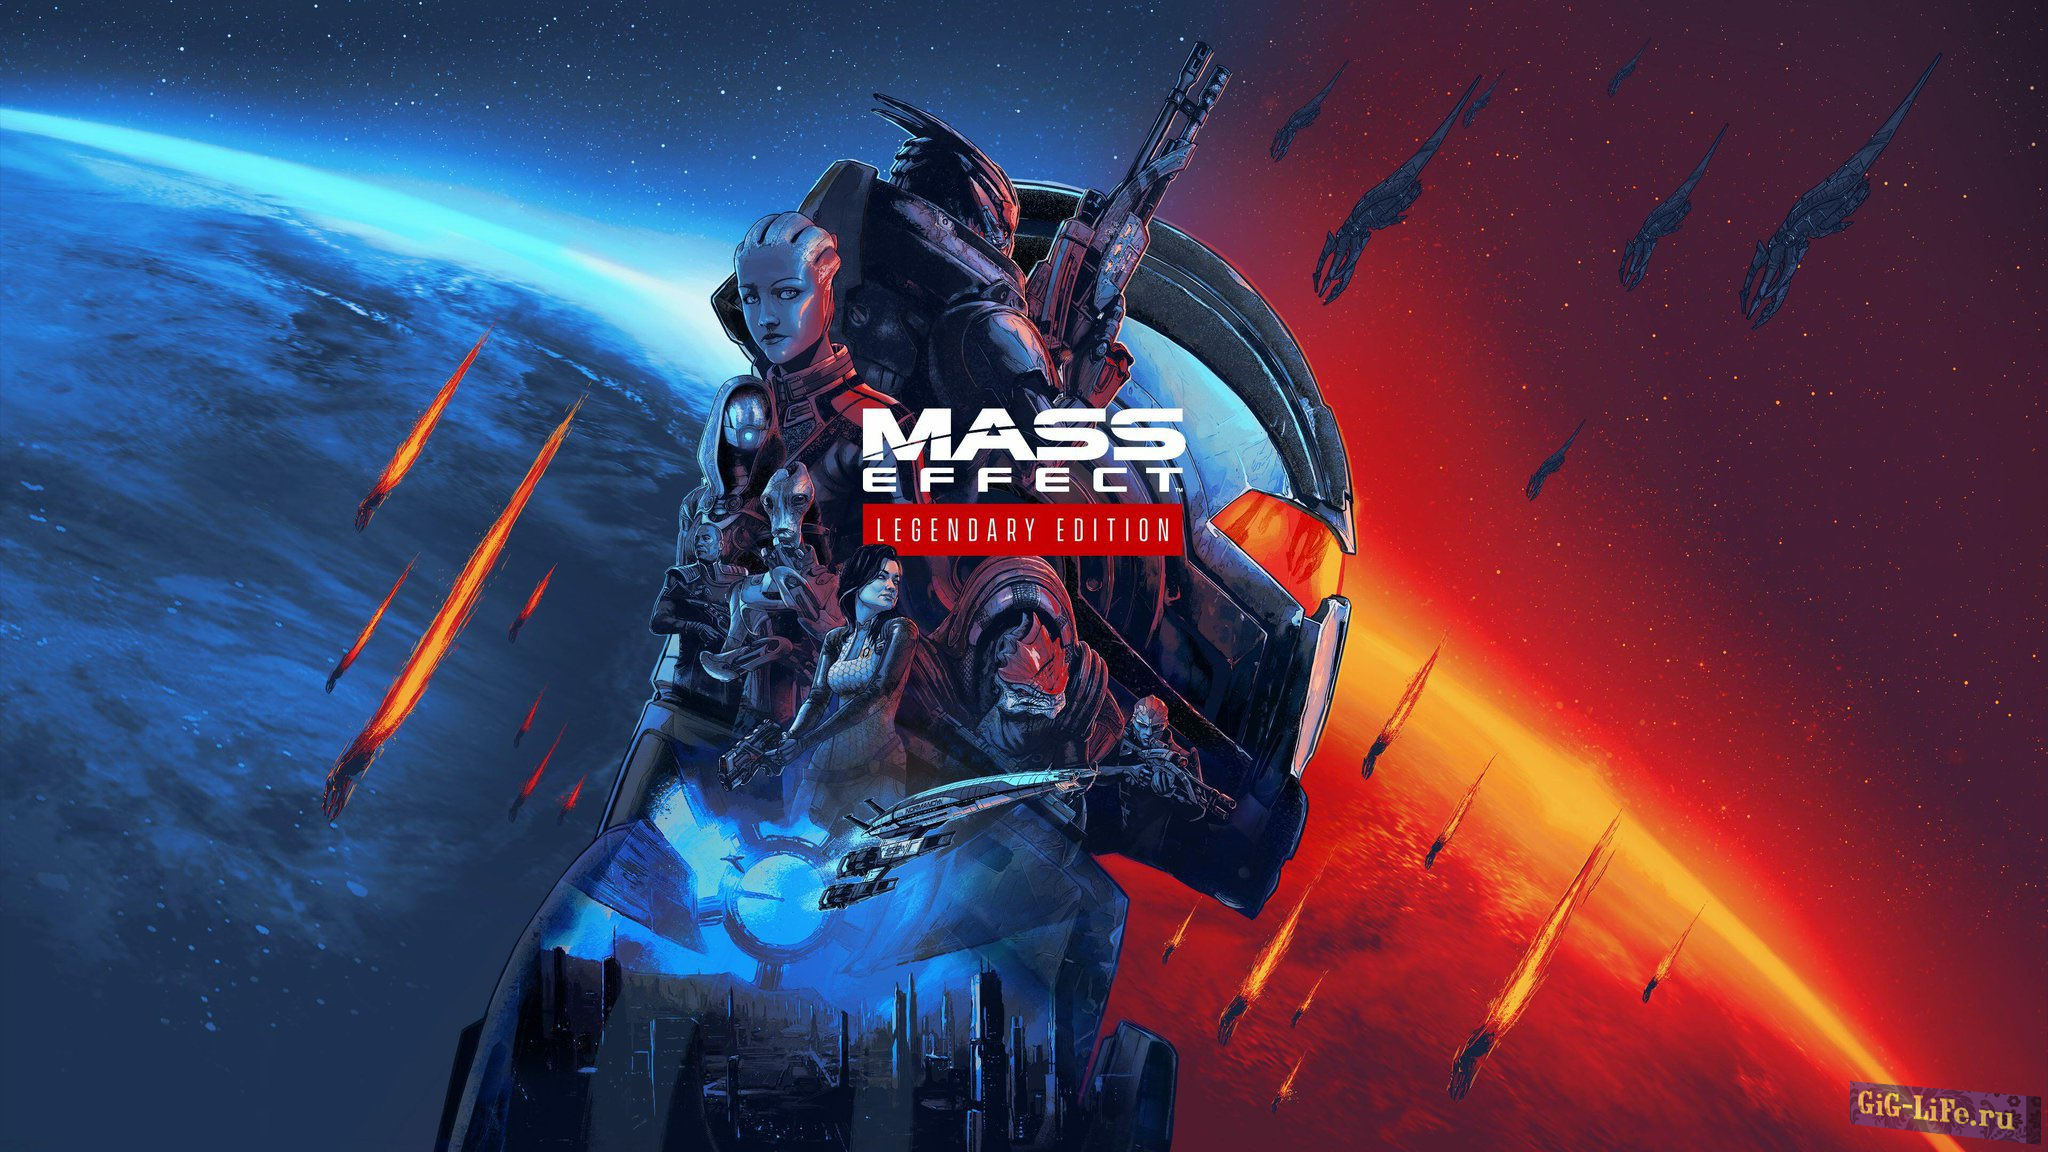 Mass Effect Legendary Edition — Официально анонсирован ремастер